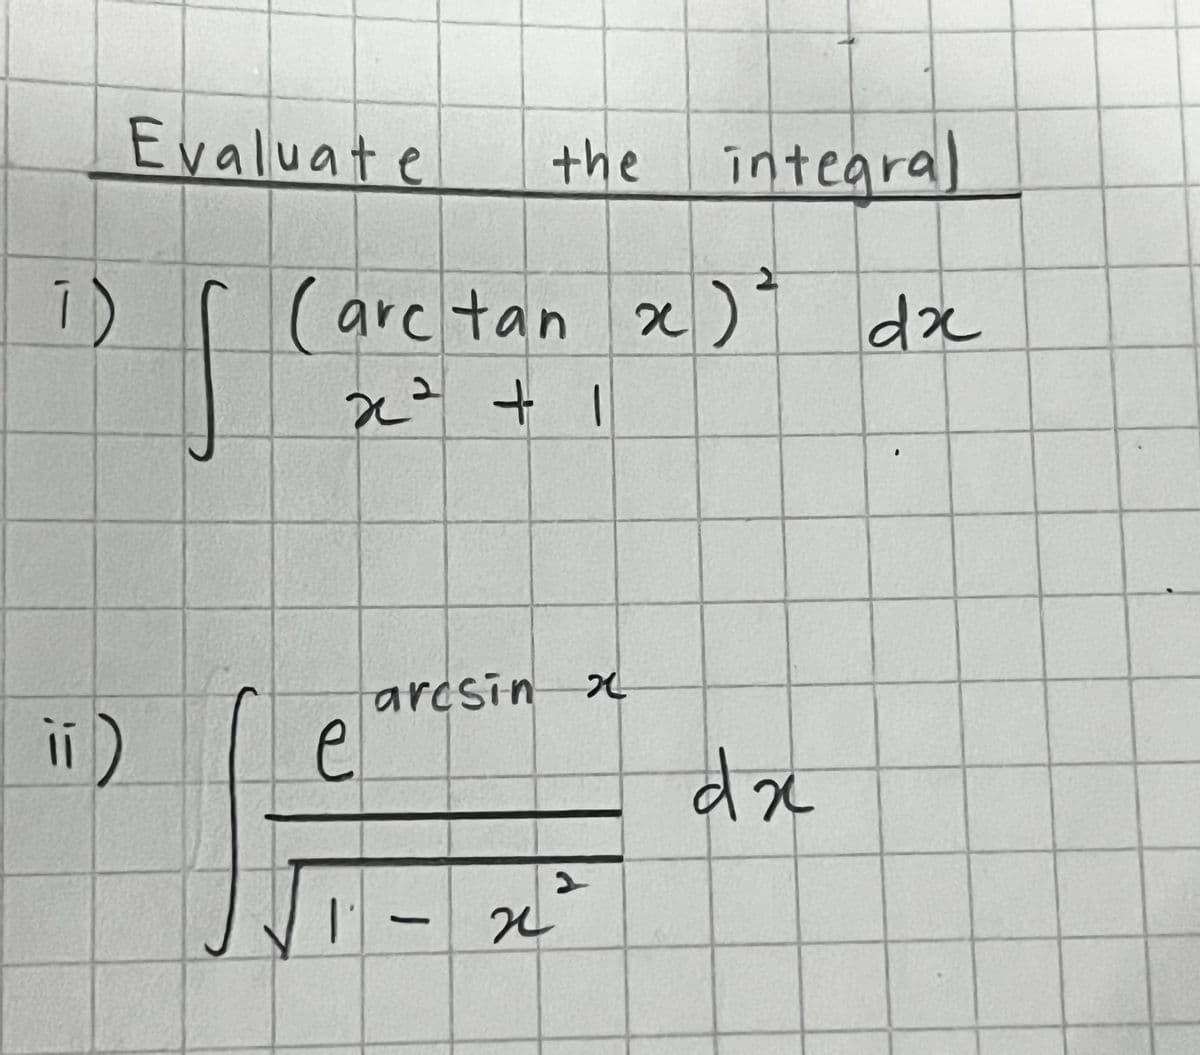 1)
Evaluate the integral
(arc tan x )² dx
x² + 1
e
arcsin x
2
ـــد
dx